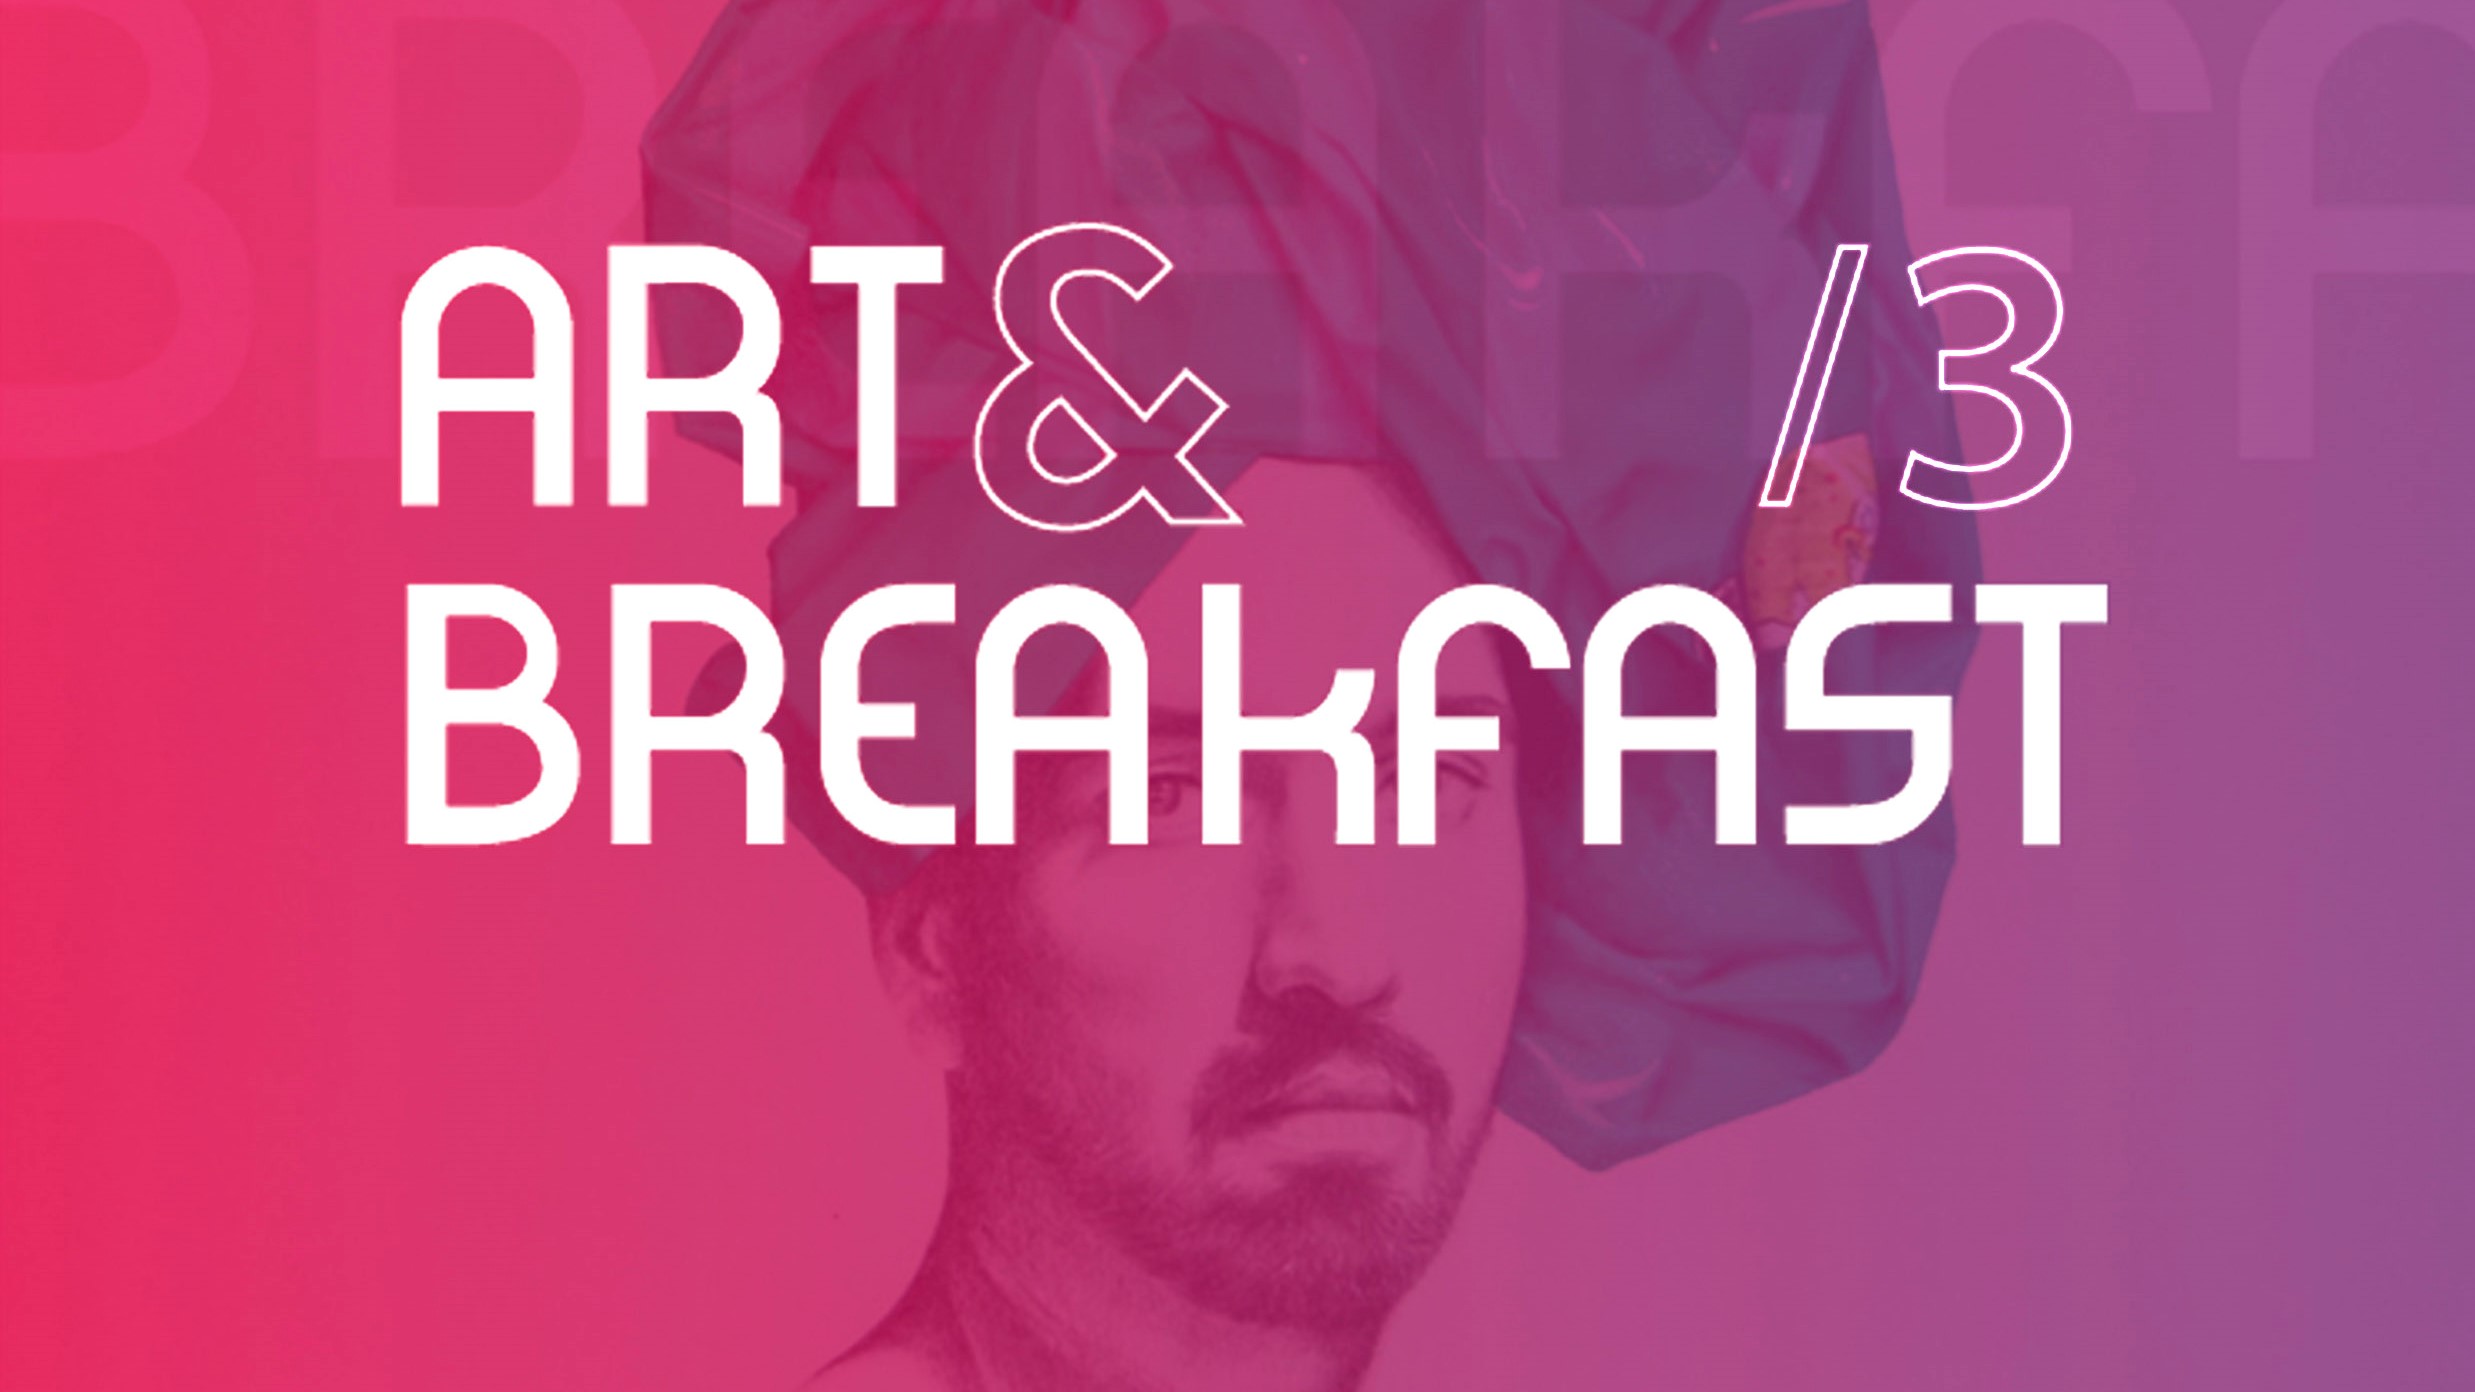 Art & Breakfast /3 invita al artista José Luis Puche